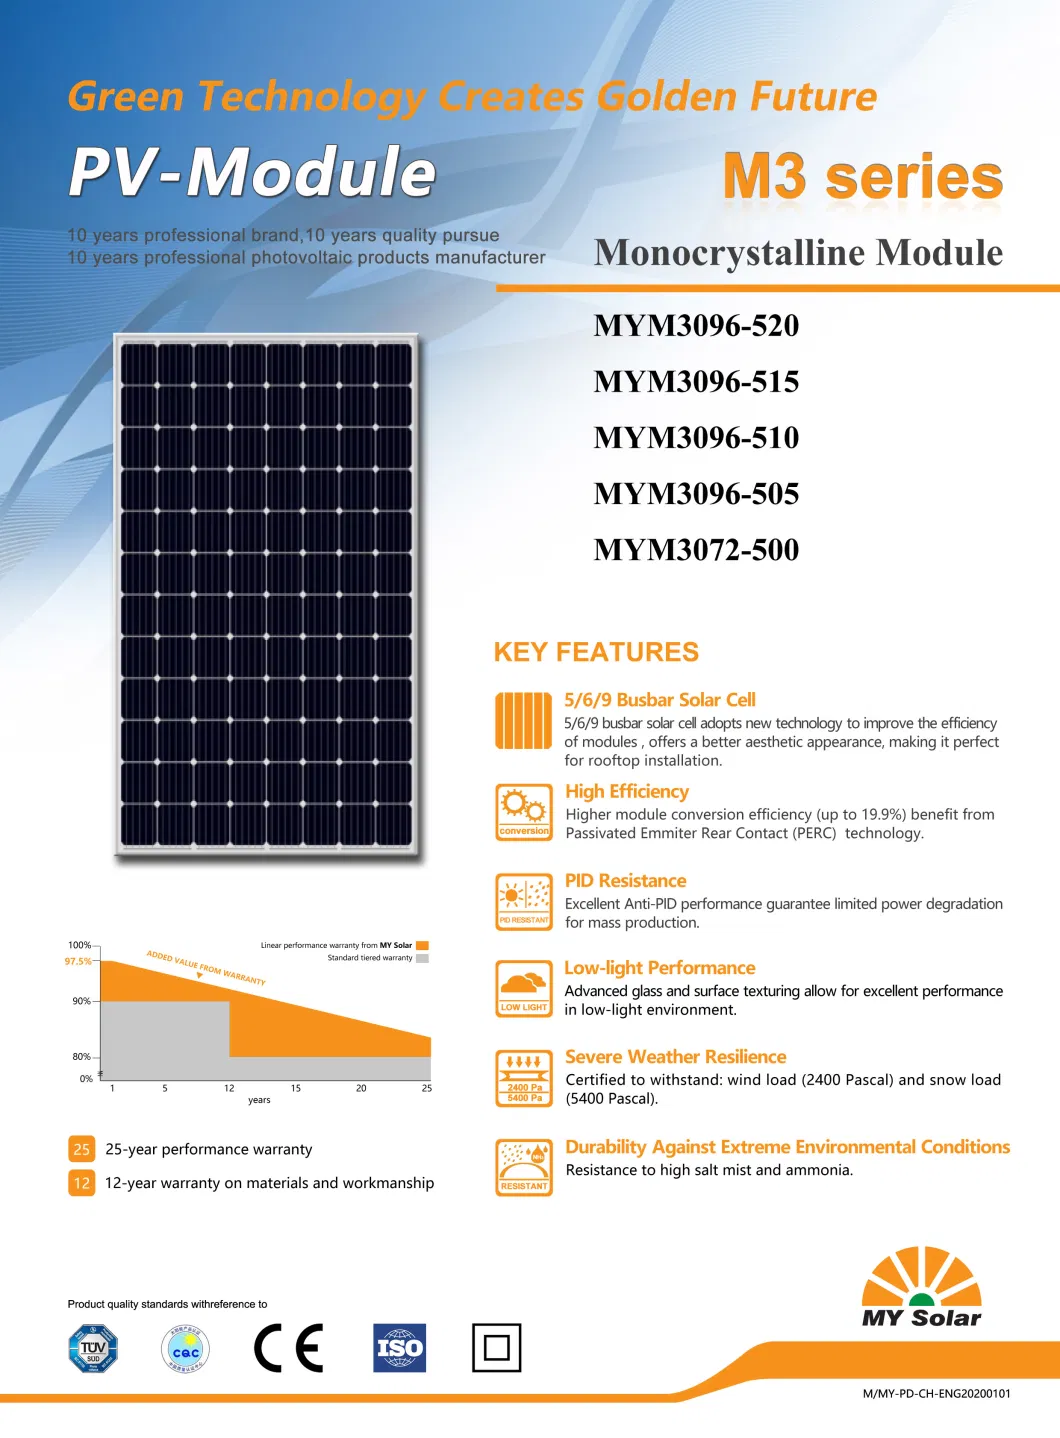 Mysolar 500W 2 Kilowatt Solar Panel Price